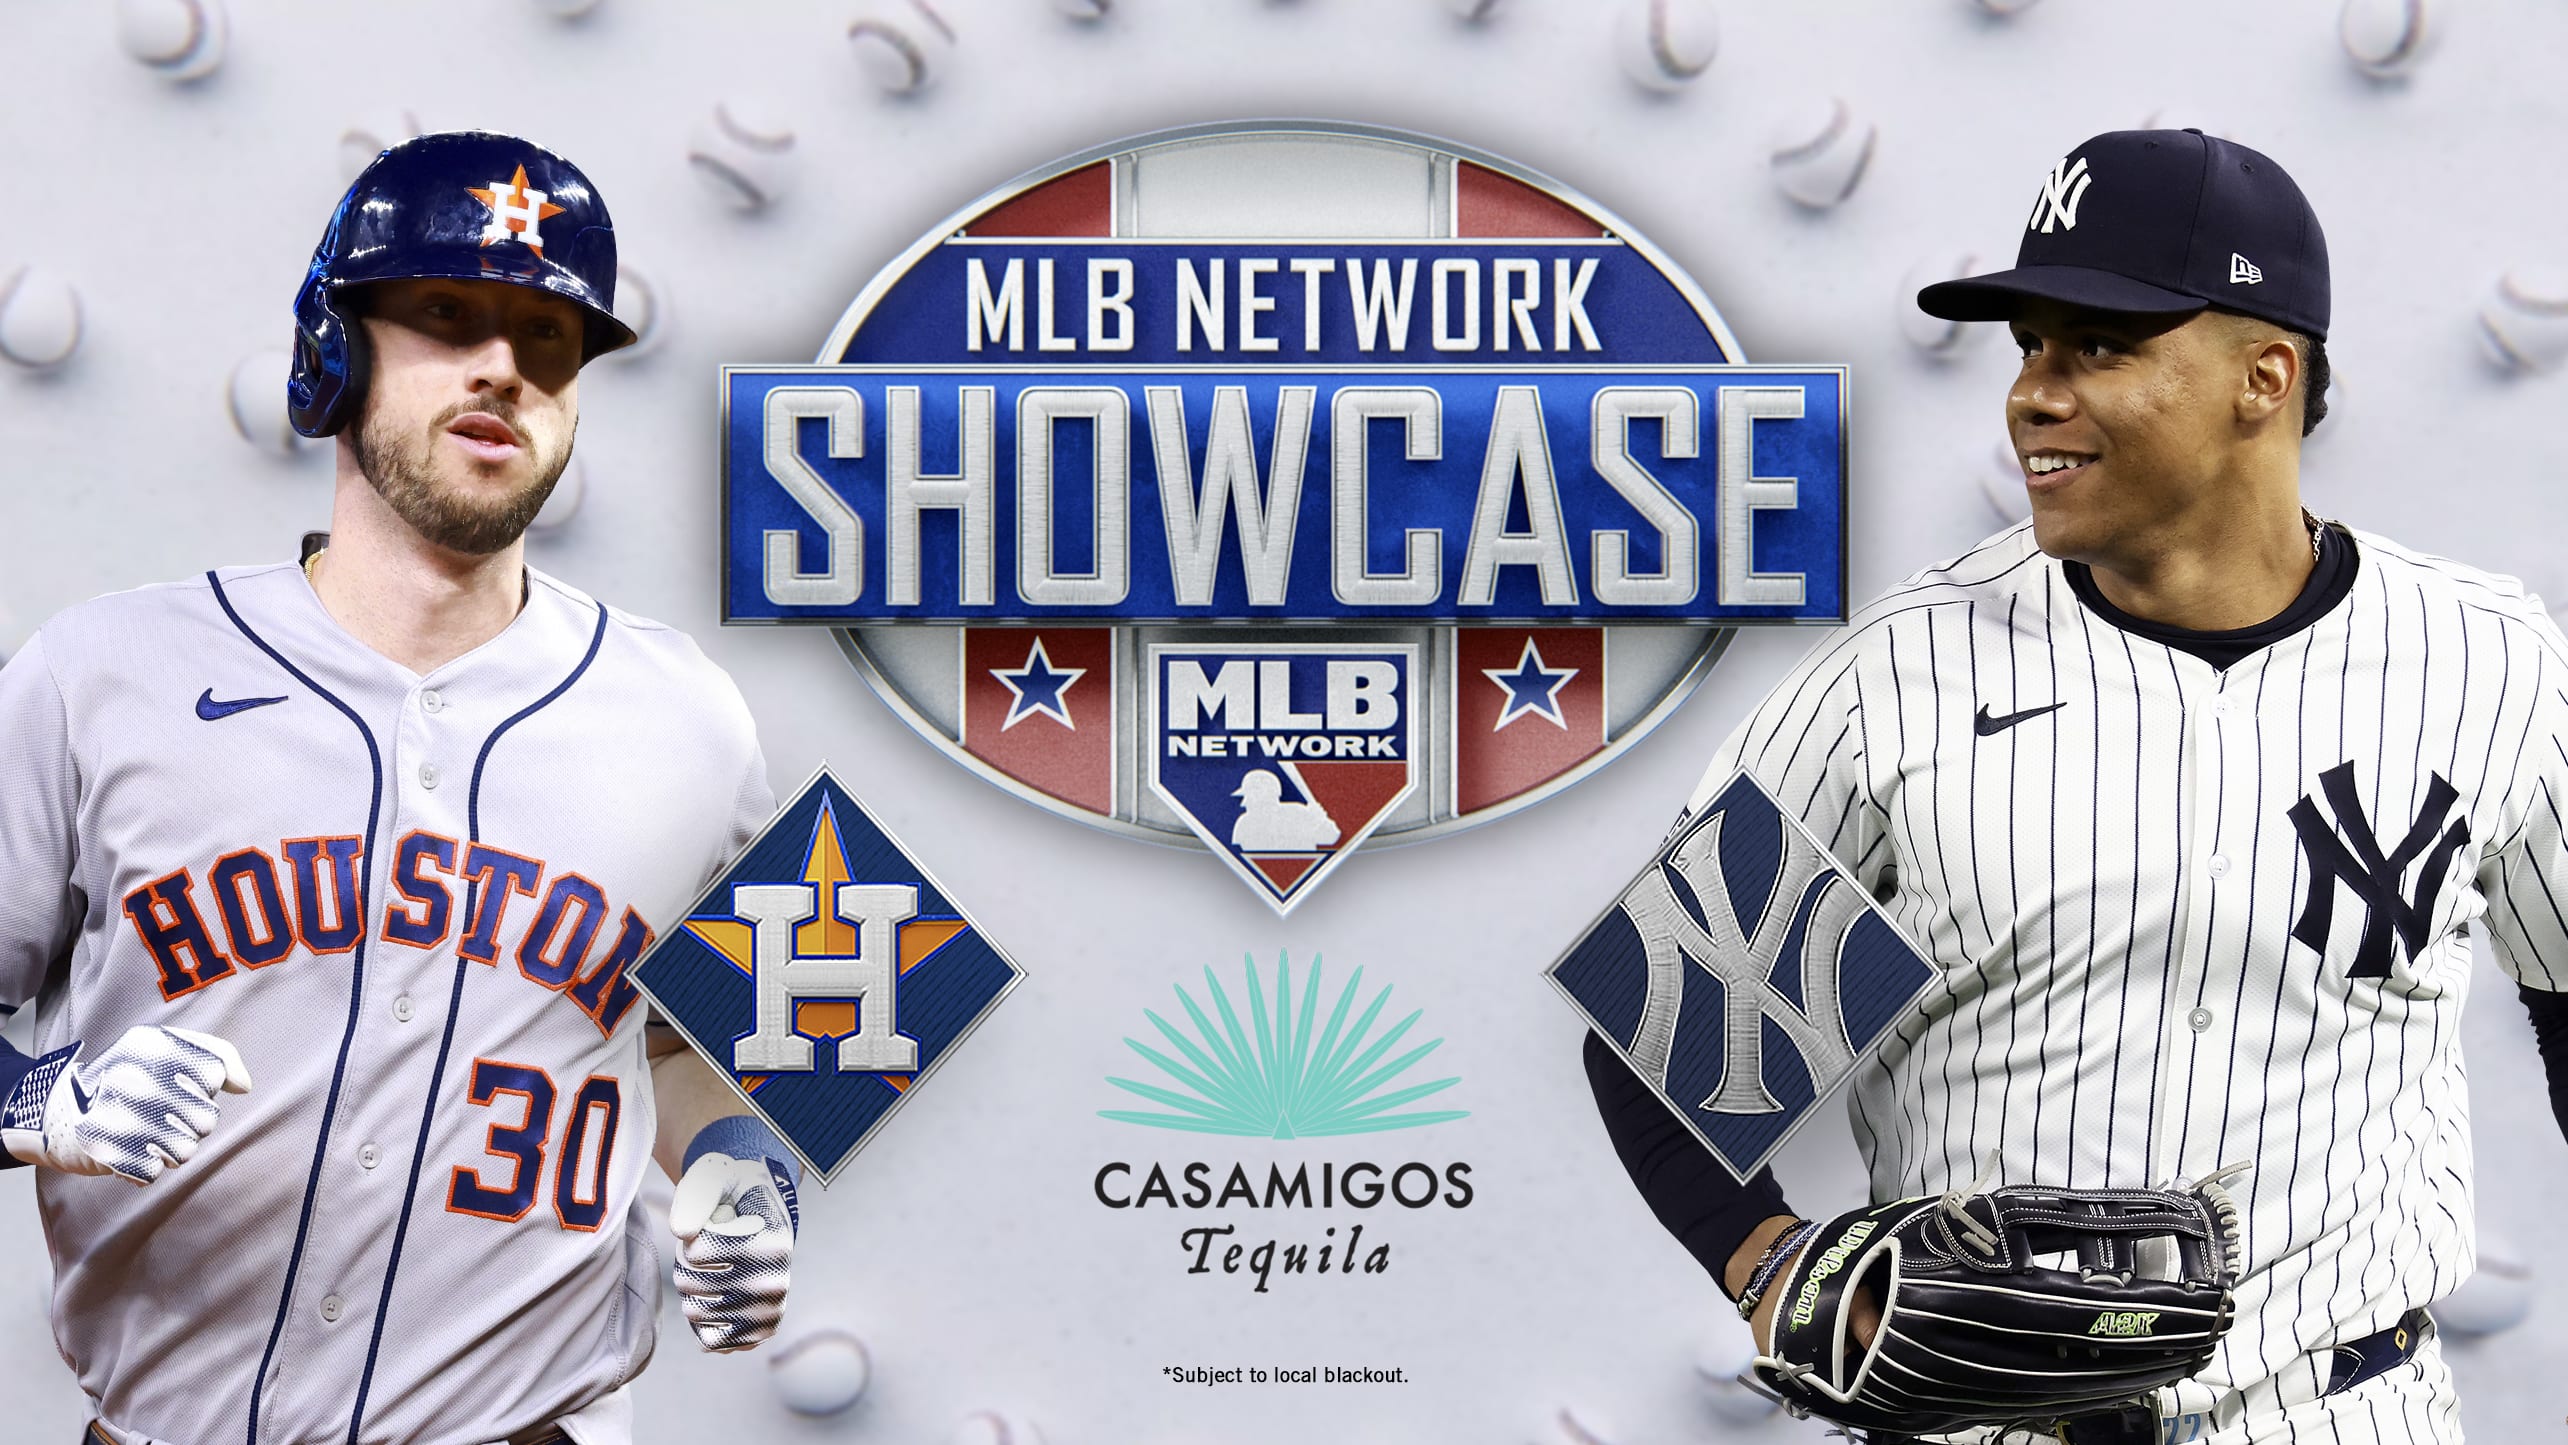 Astros-Yankees on MLB Network Showcase